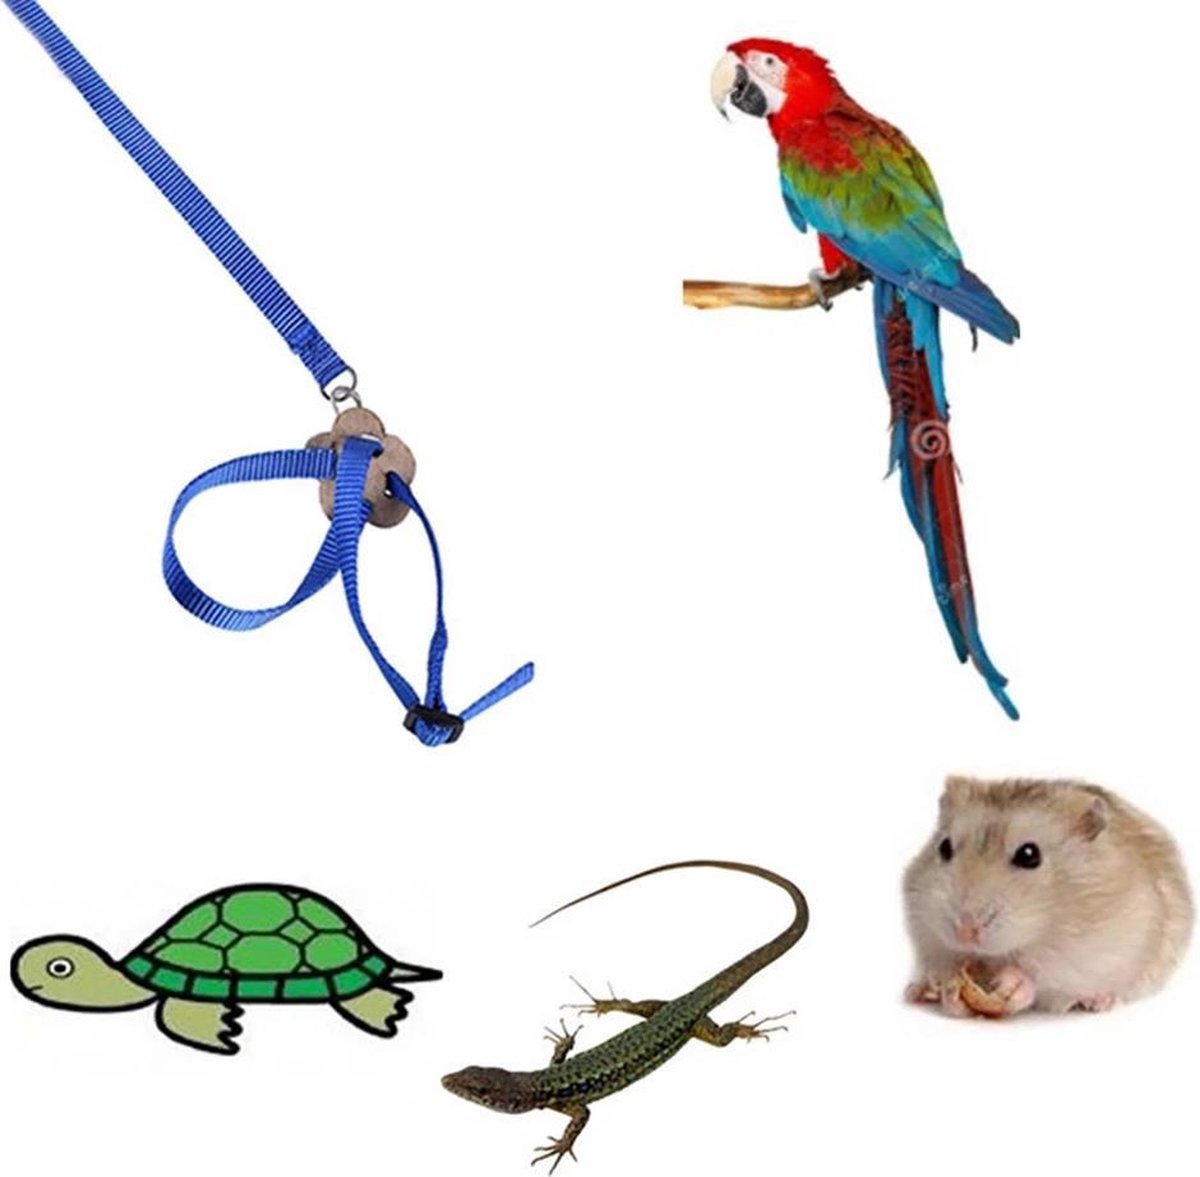 Vogel harnas - Tuigje voor parkiet, kaketoe of kleine papegaai - Vlieg harnas - Looptuigje -  Vogeltuigje - Blauw - Merkloos